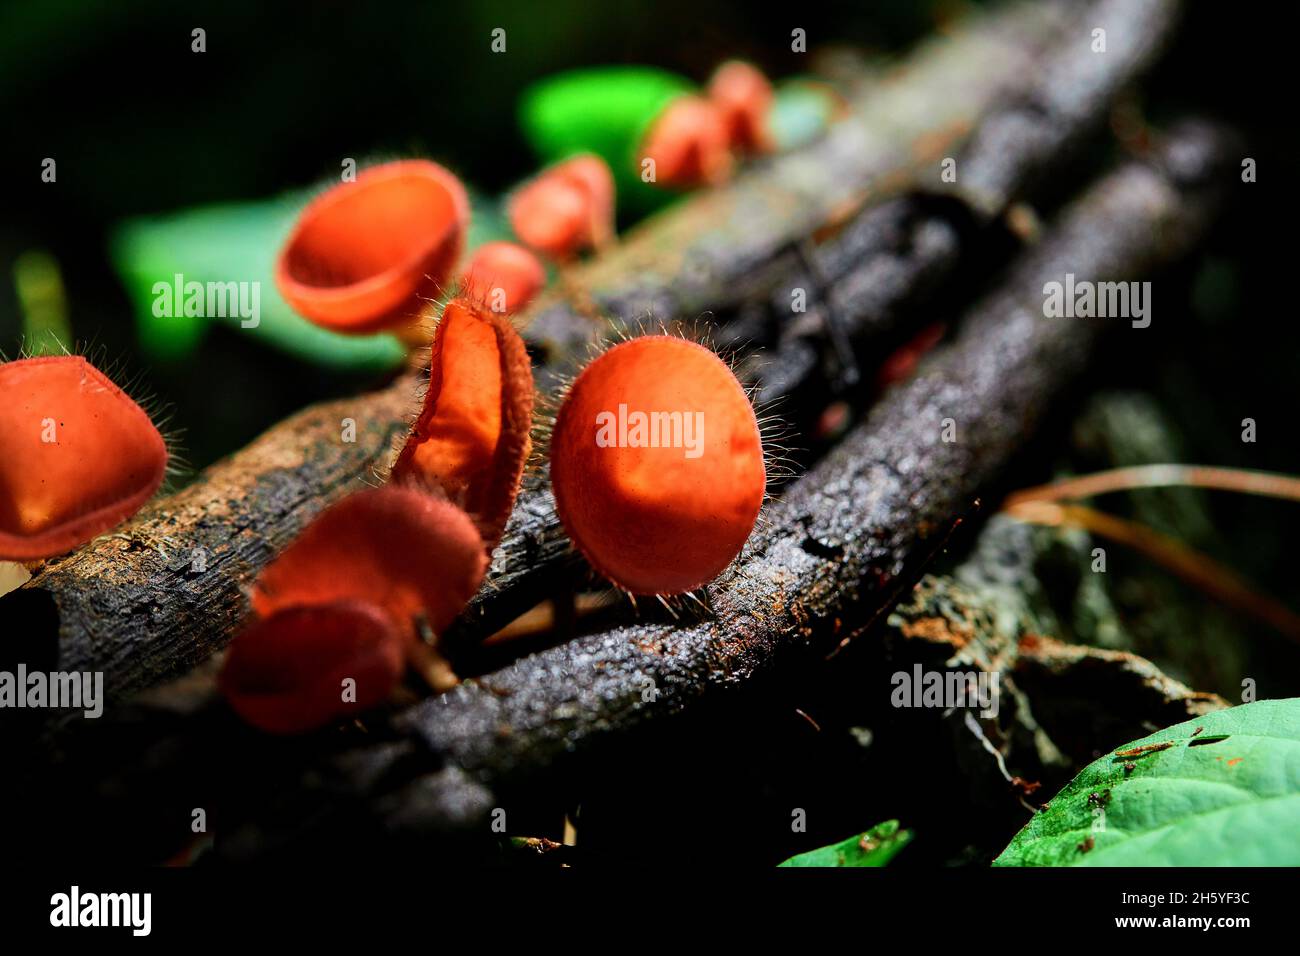 Close up Fungi cup red mushroom Stock Photo